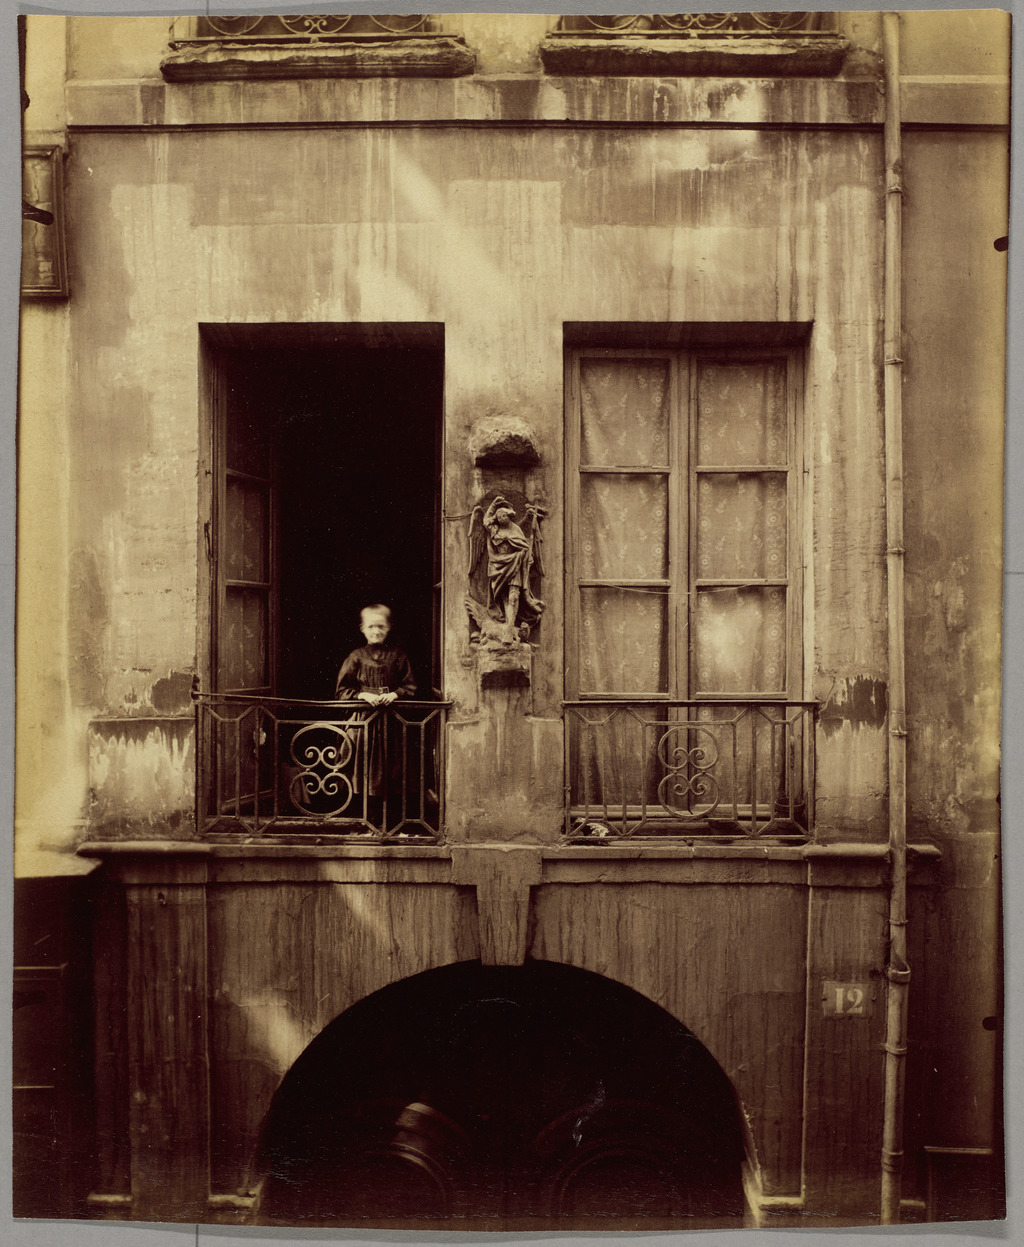 Old College of Chanac, 12 rue de Bièvre, 1900, Eugène Atget. Albumen silver print. Getty Museum